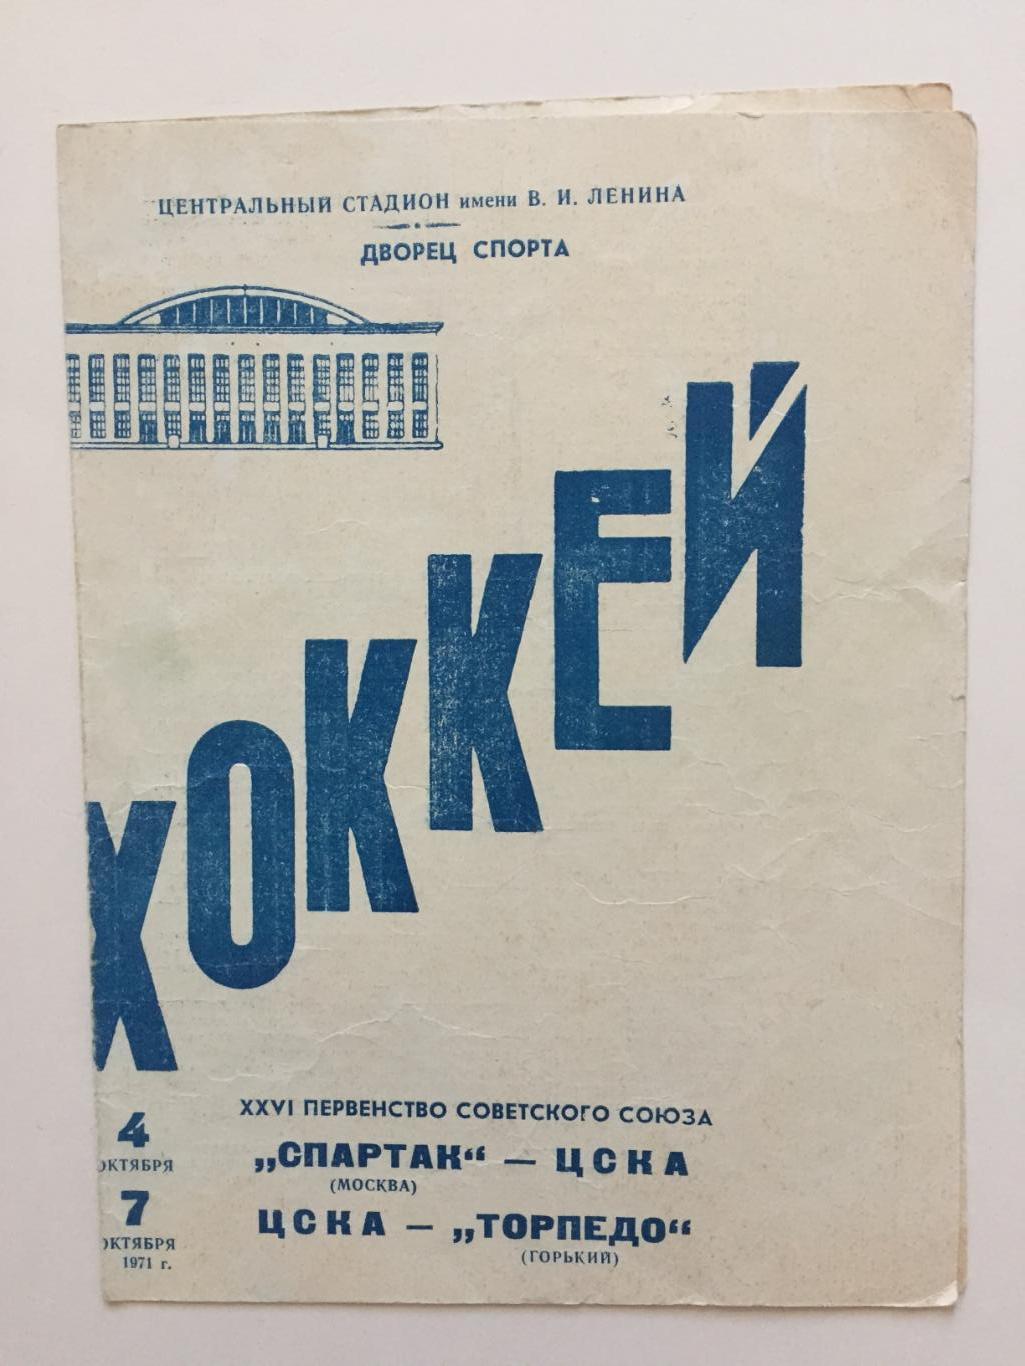 Спартак(Москва) - ЦСКА - Торпедо Горький 04,07.10.1971